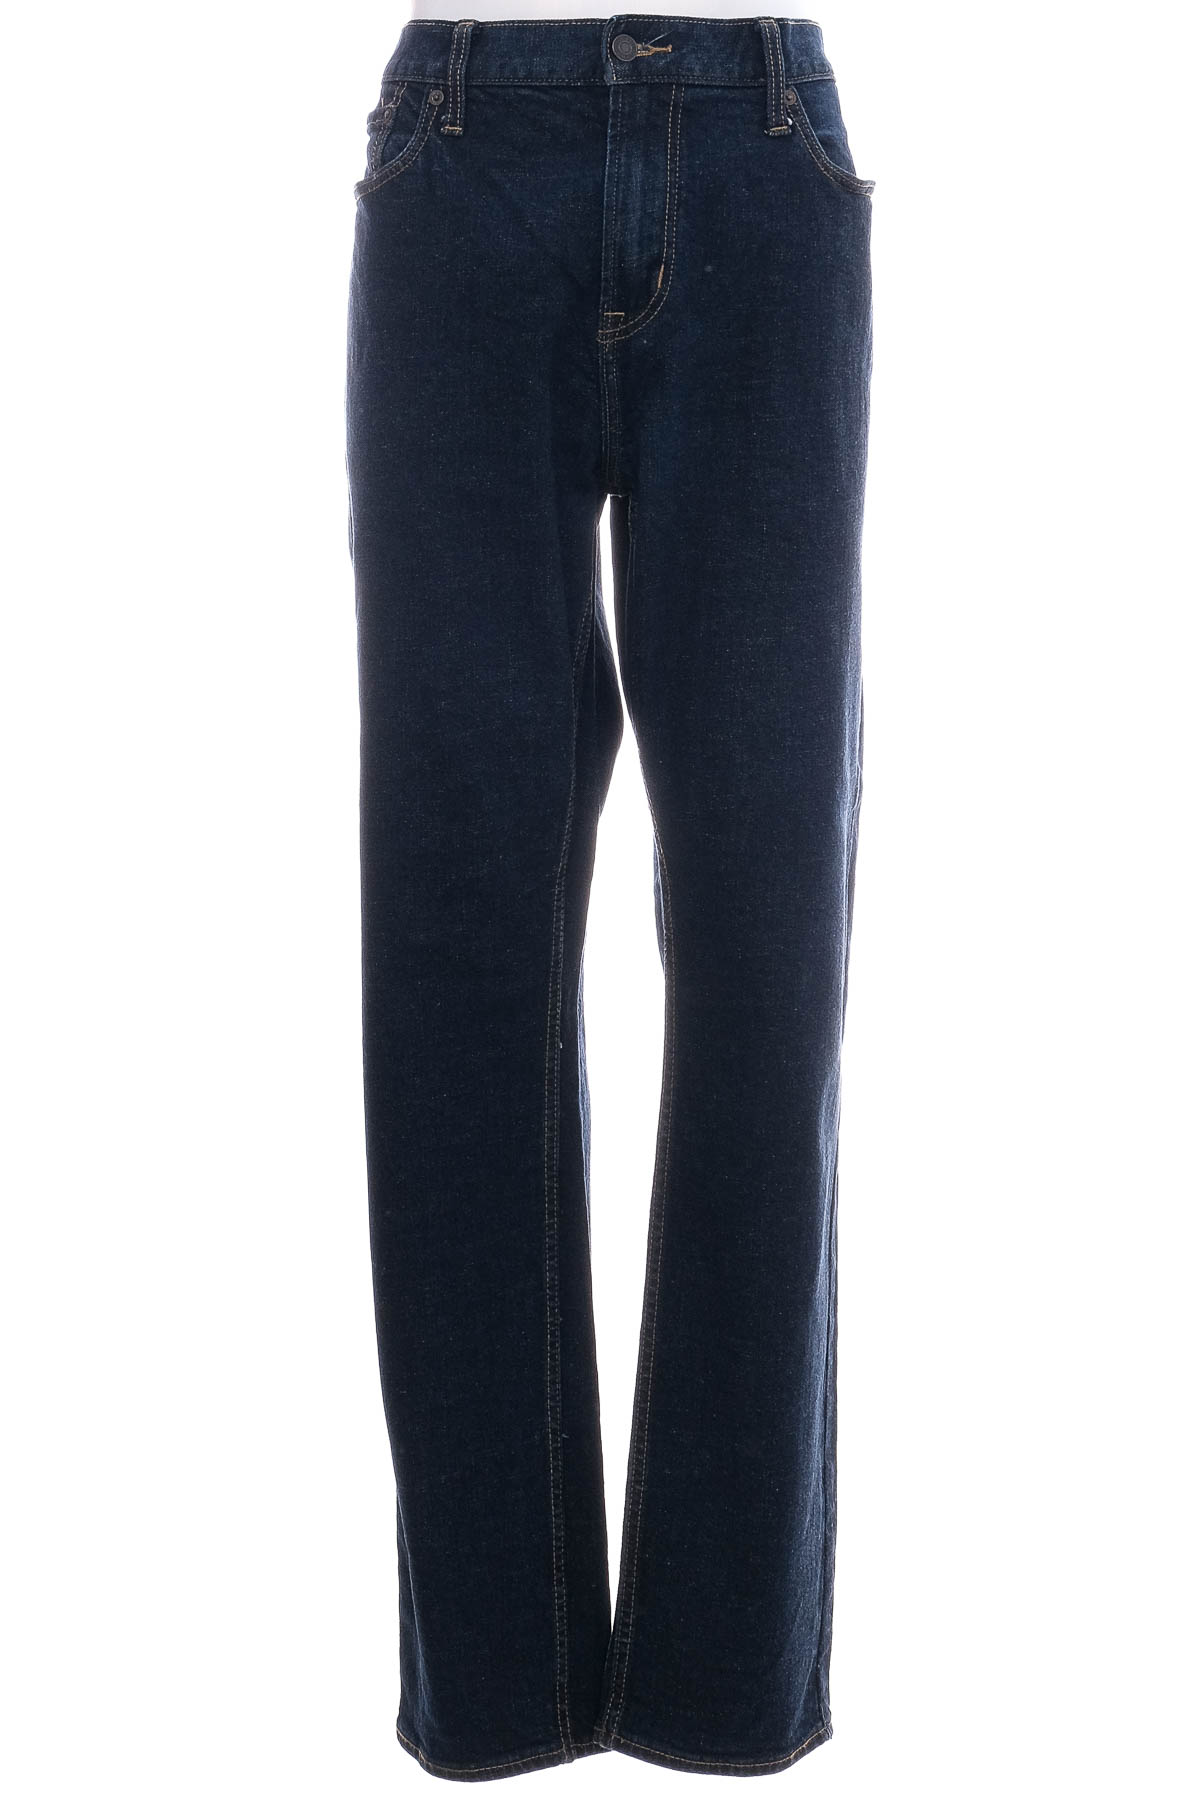 Men's jeans - OLD NAVY - 0